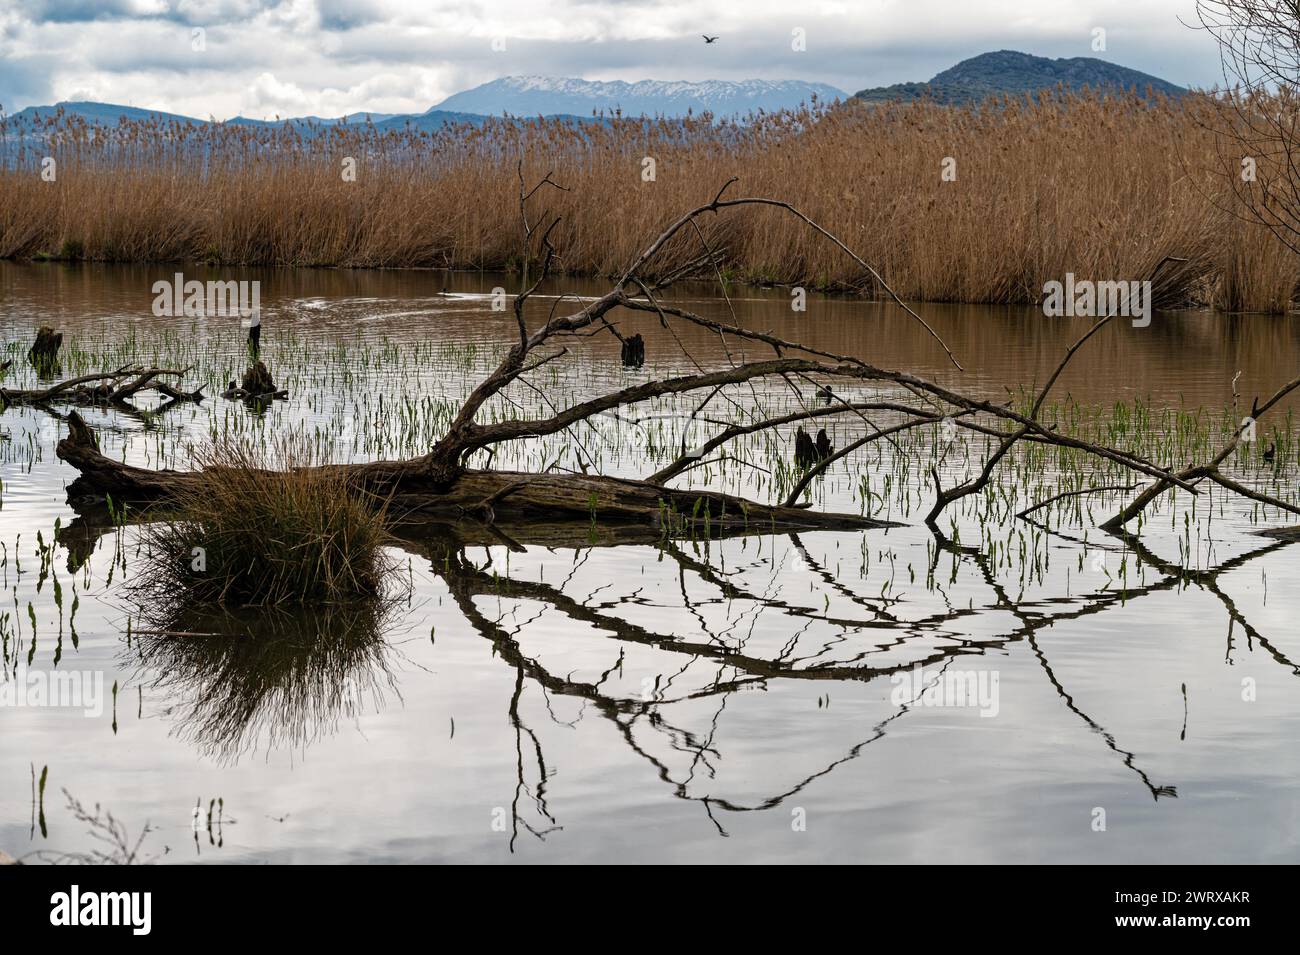 View of the Pamvotis lake in Ioannina, Greece Stock Photo